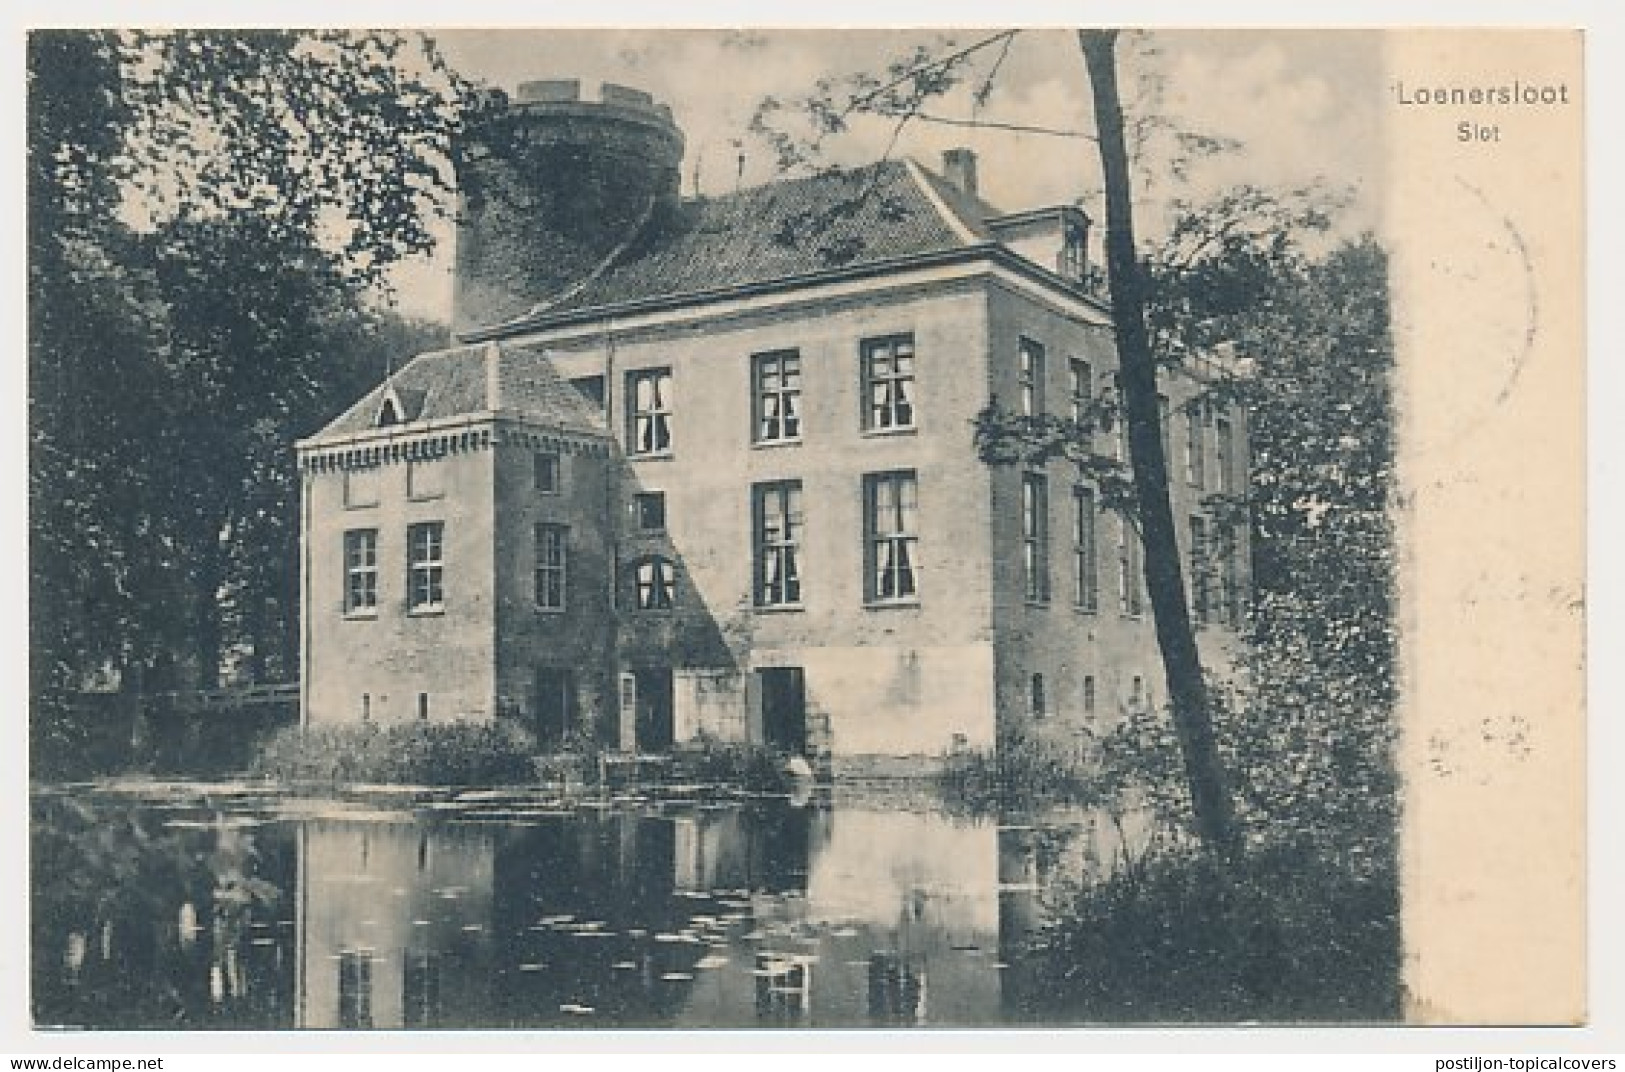 Kleinrondstempel Loenersloot 1908 - Non Classificati